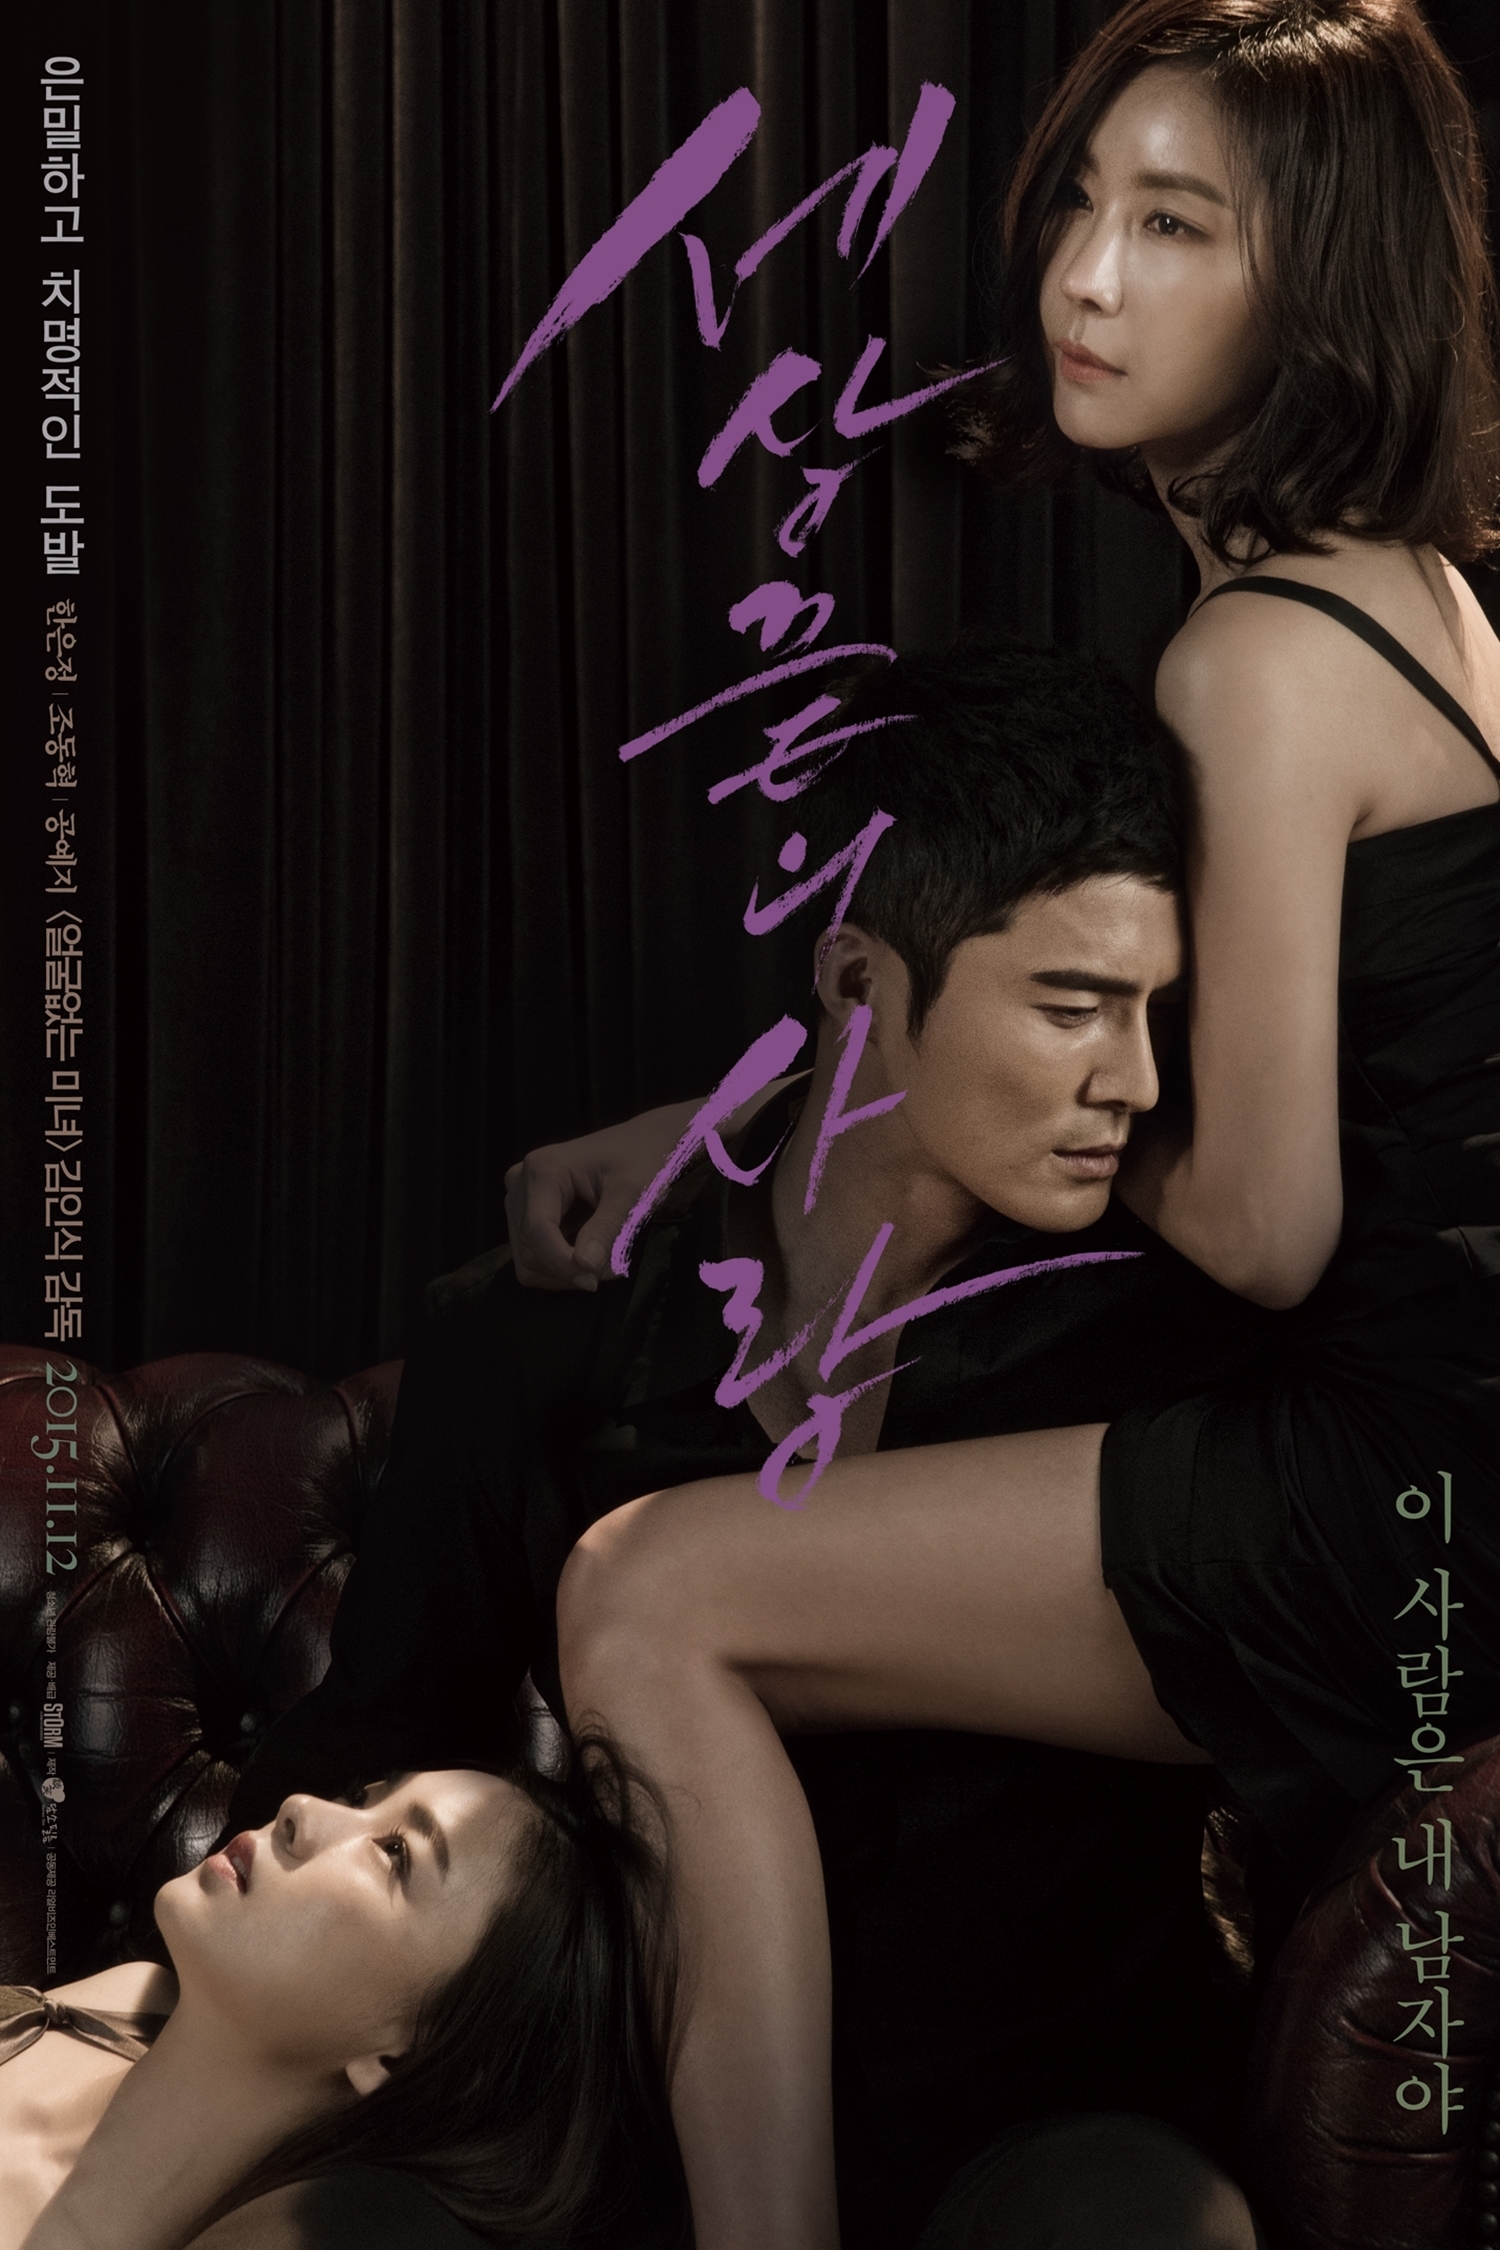 david reader share korea hot movie 2015 list photos